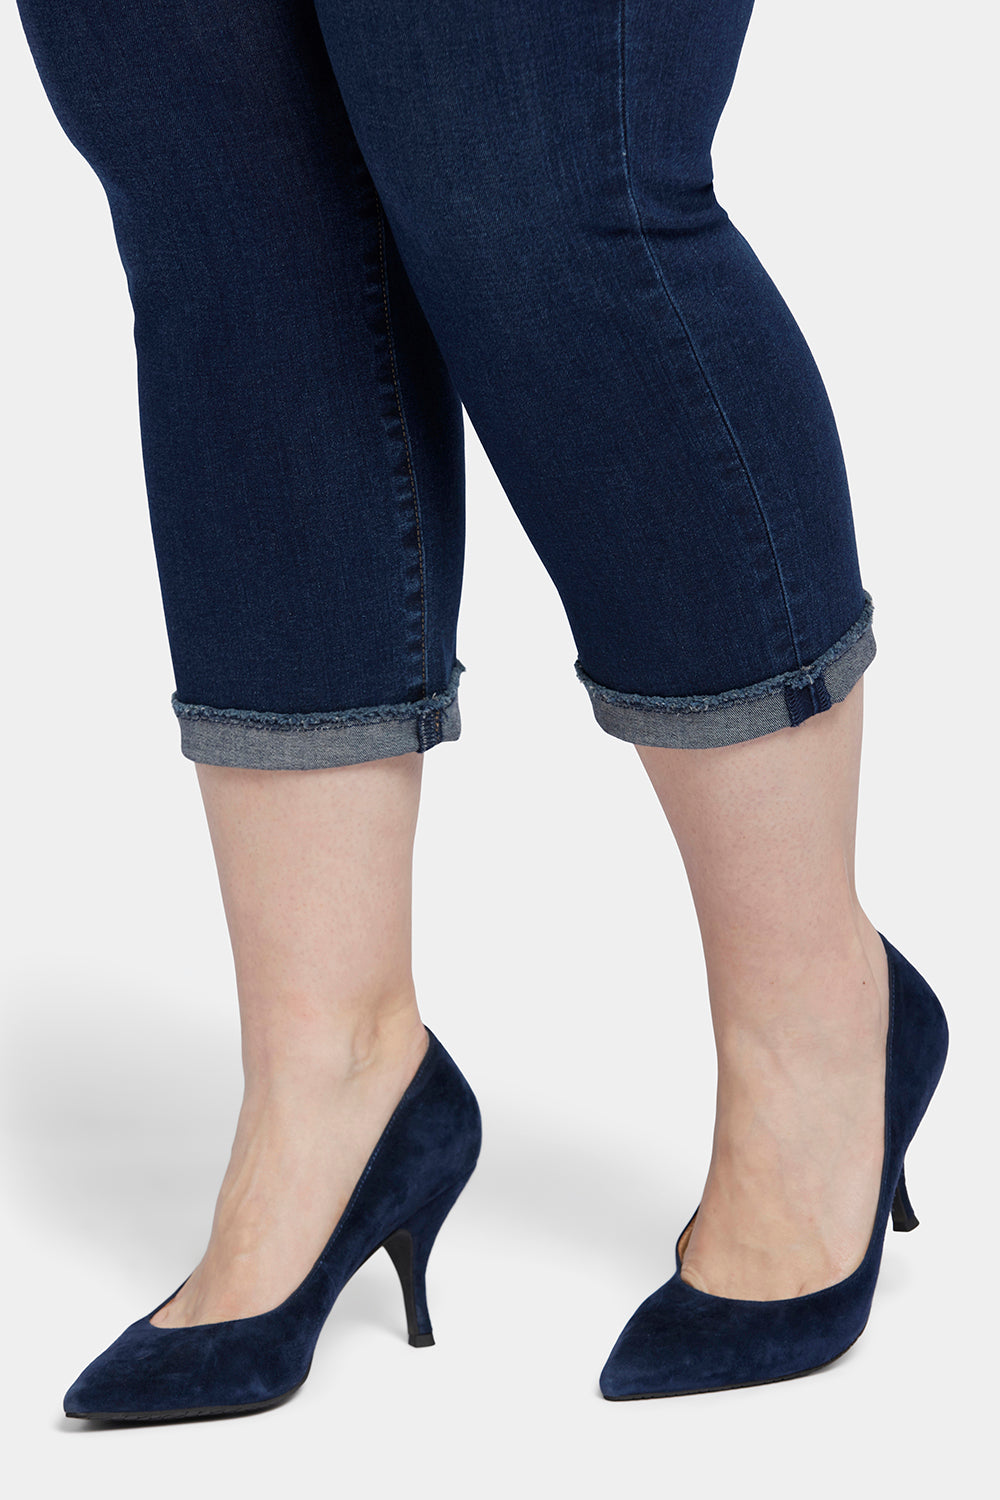 NYDJ Chloe Capri Jeans In Plus Size With Cuffs - Northbridge